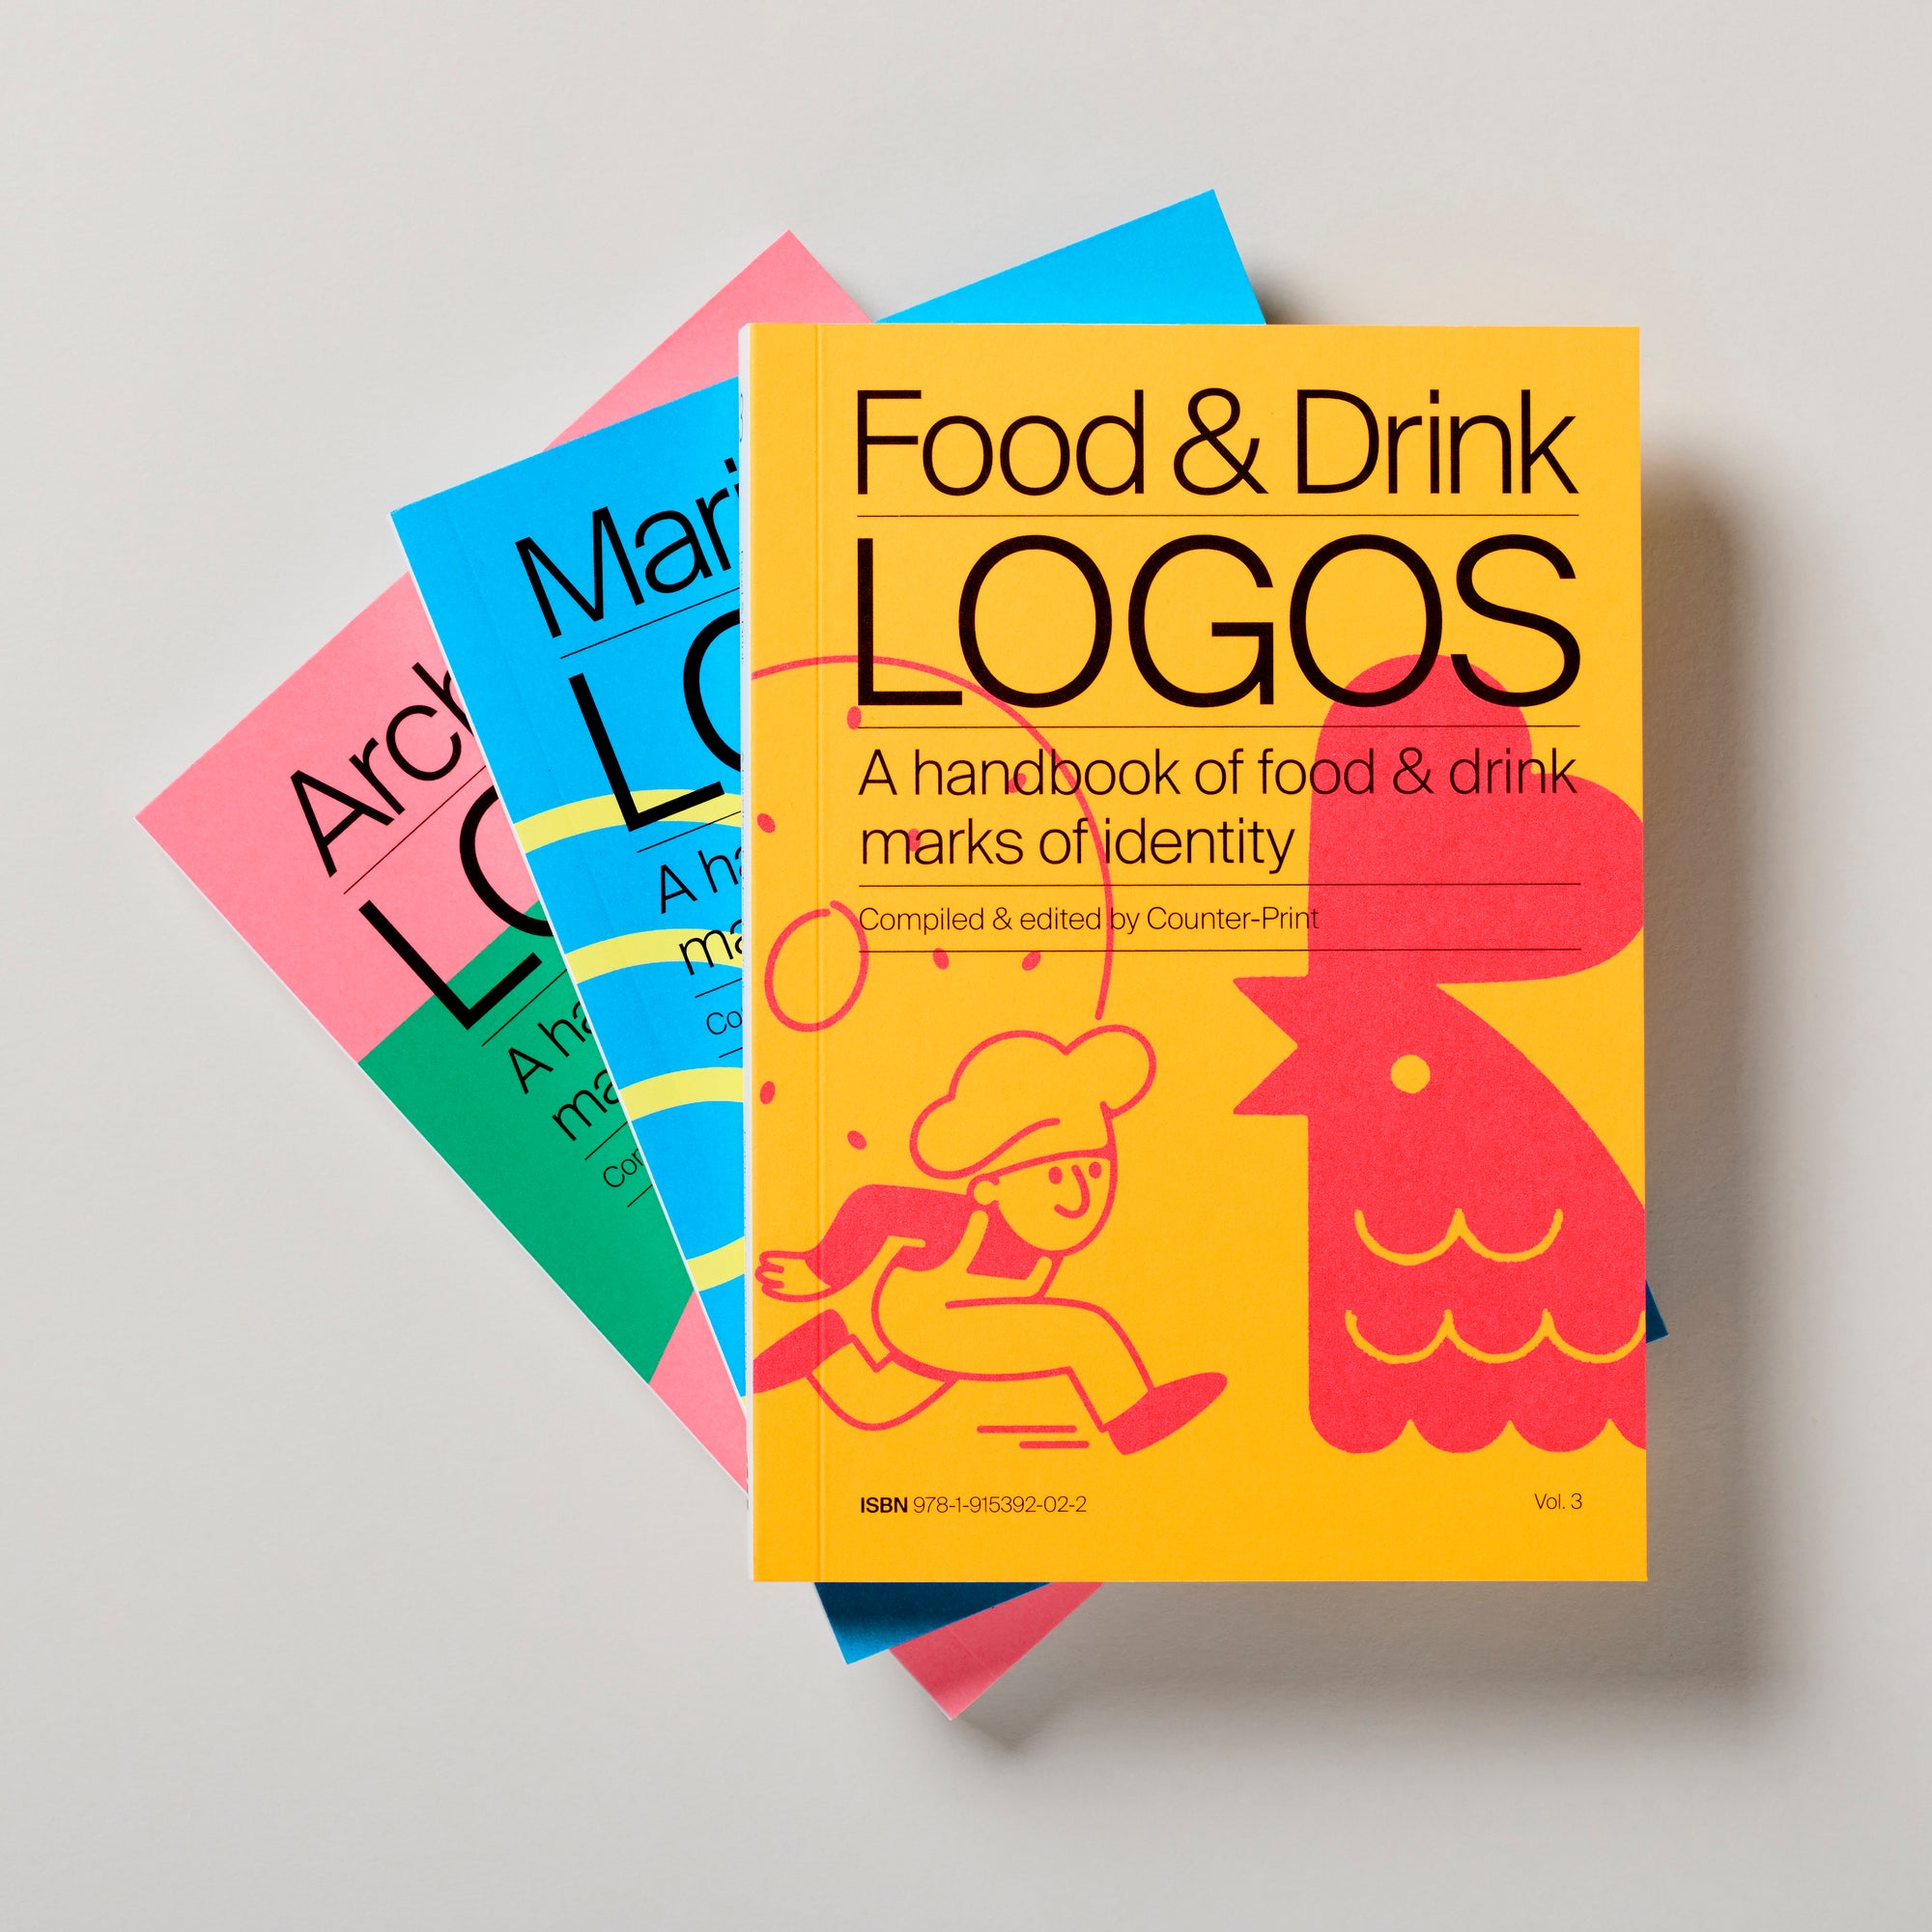 Food & Drink Logos